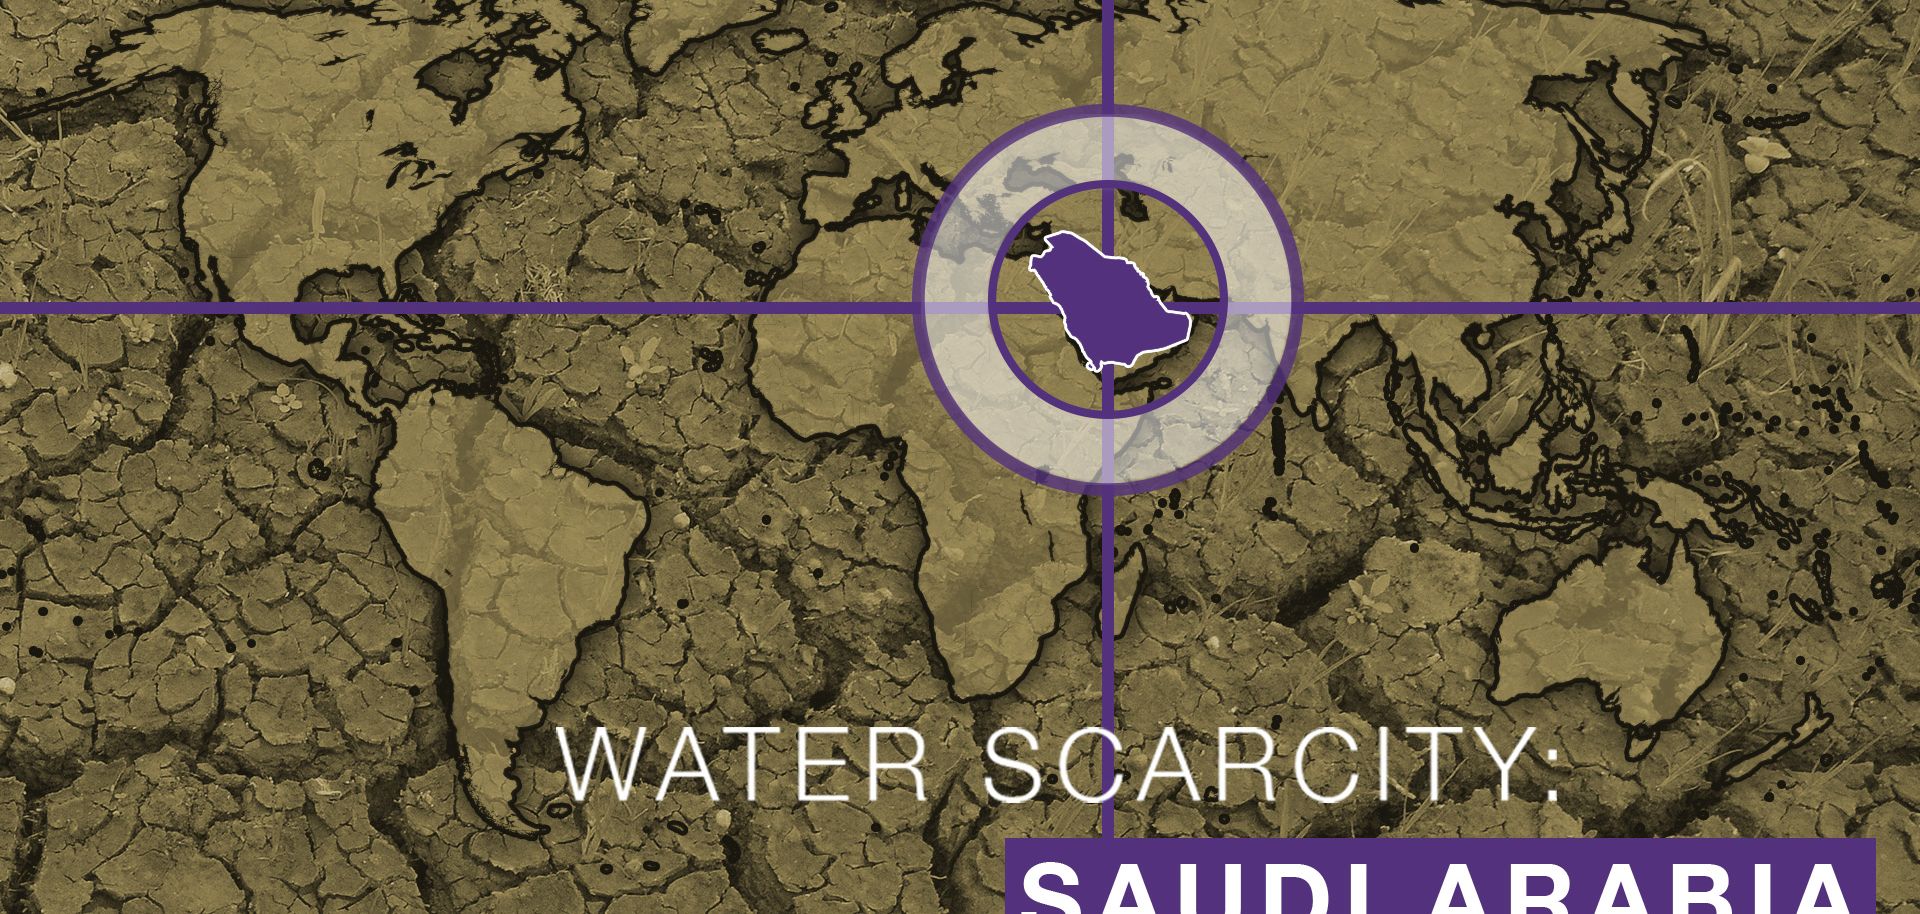 Water Scarcity: Saudi Arabia